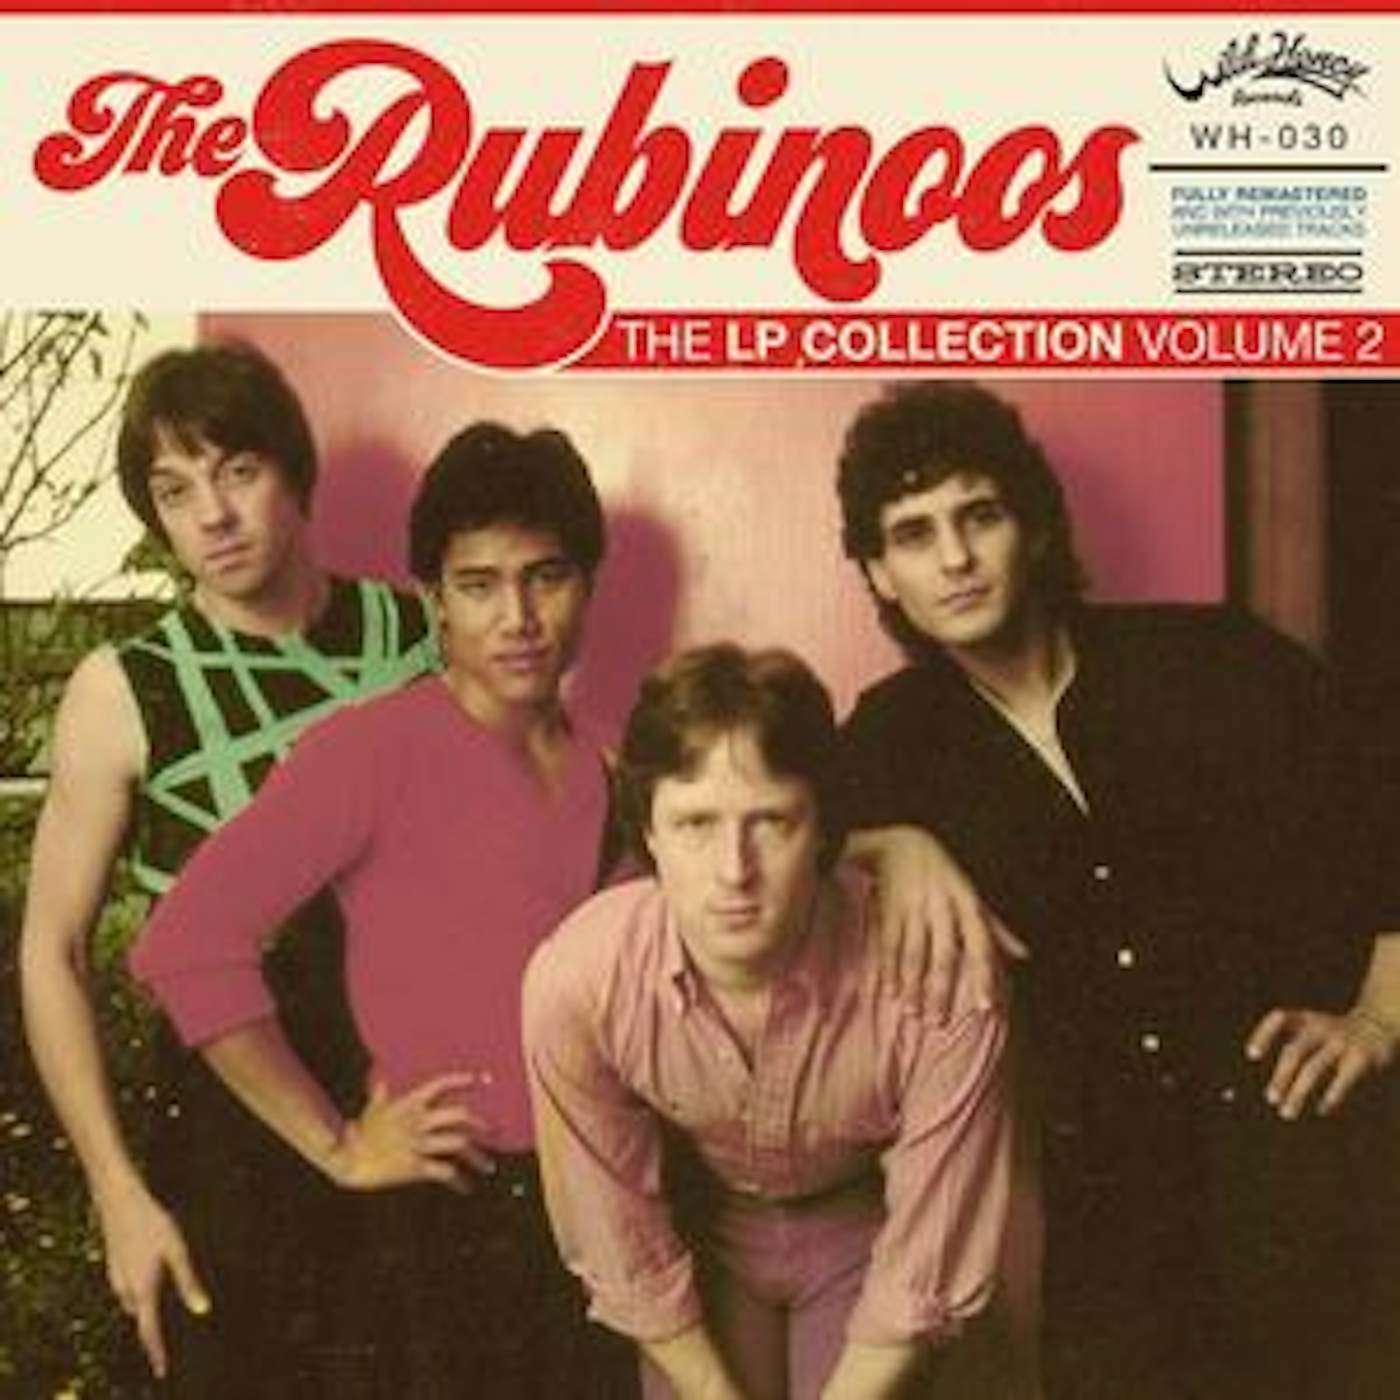 The Rubinoos LP COLLECTION 2 Vinyl Record